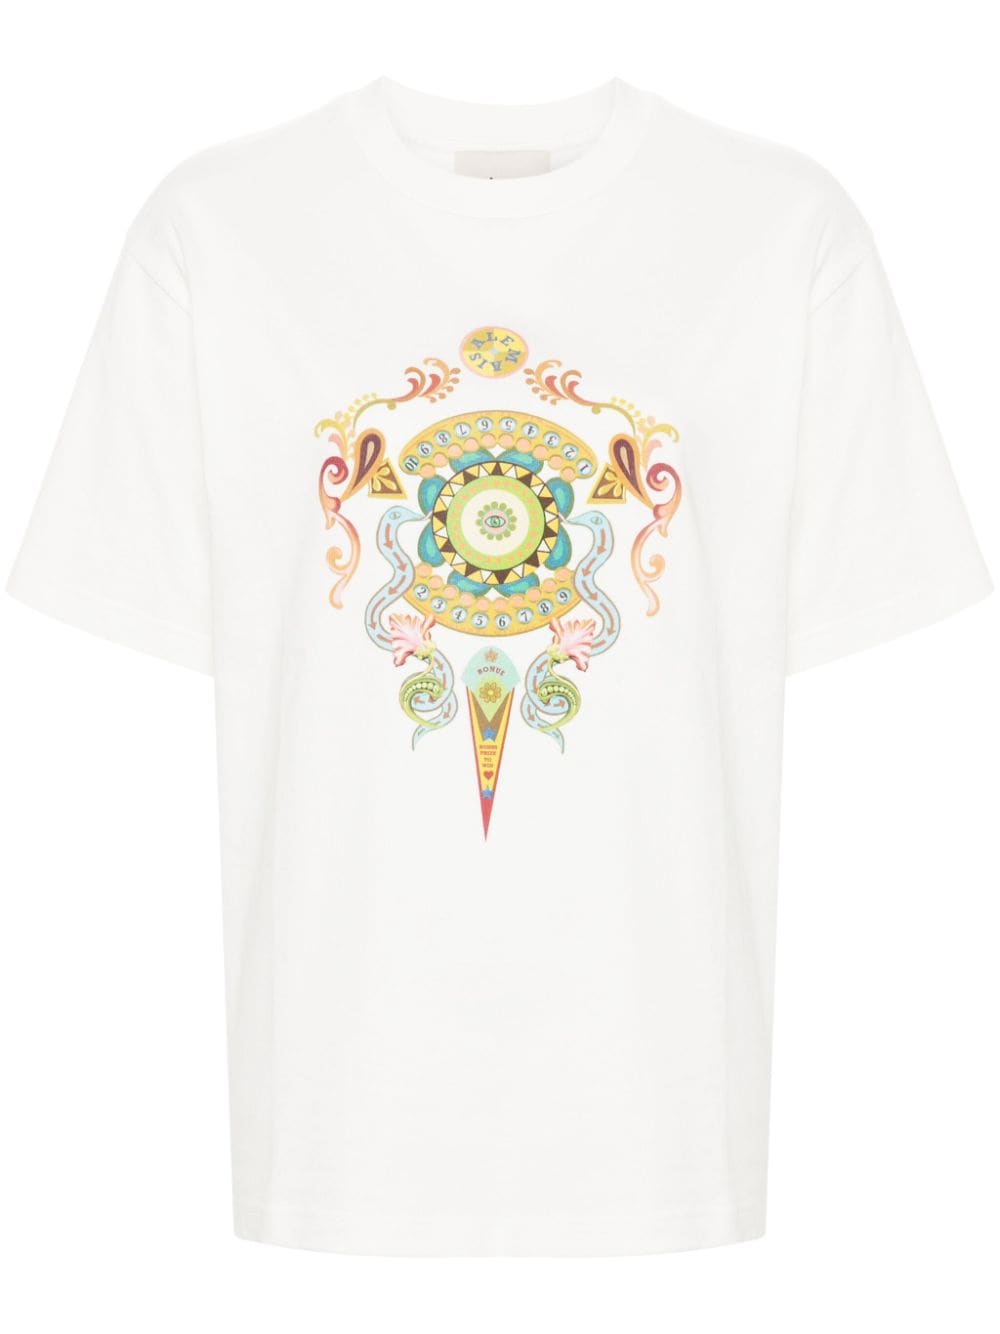 Pinball organic cotton T-shirt